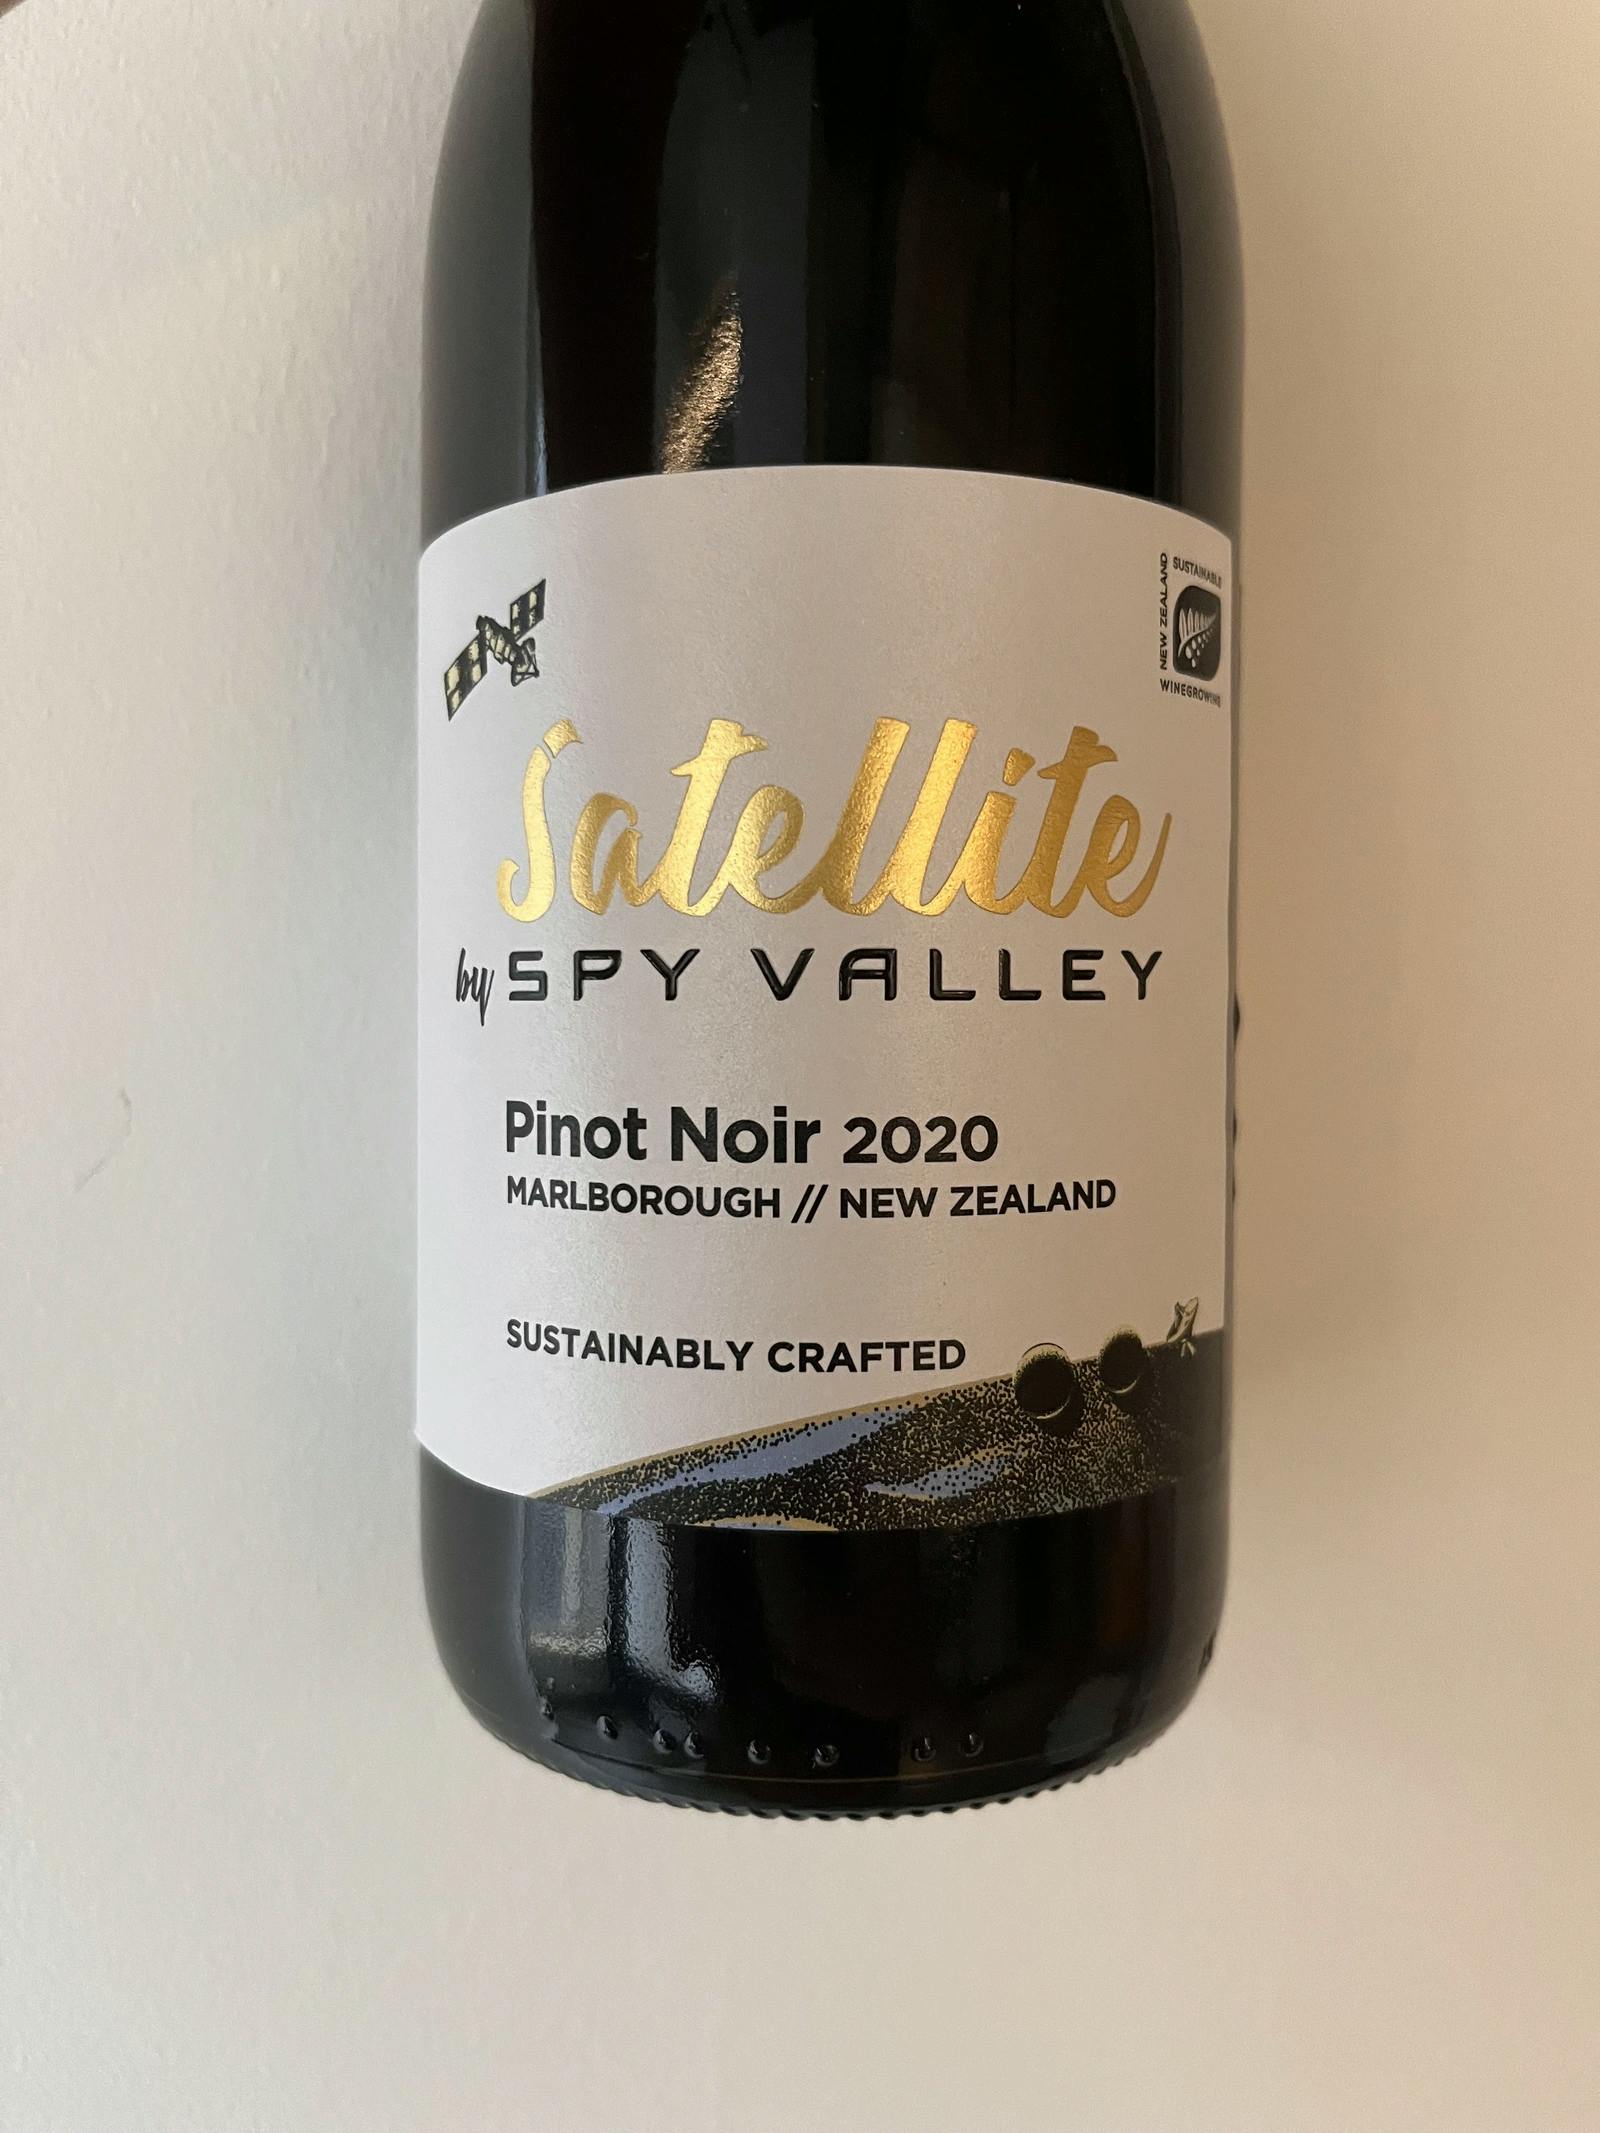 Spy Valley Satellite Pinot Noir 2020